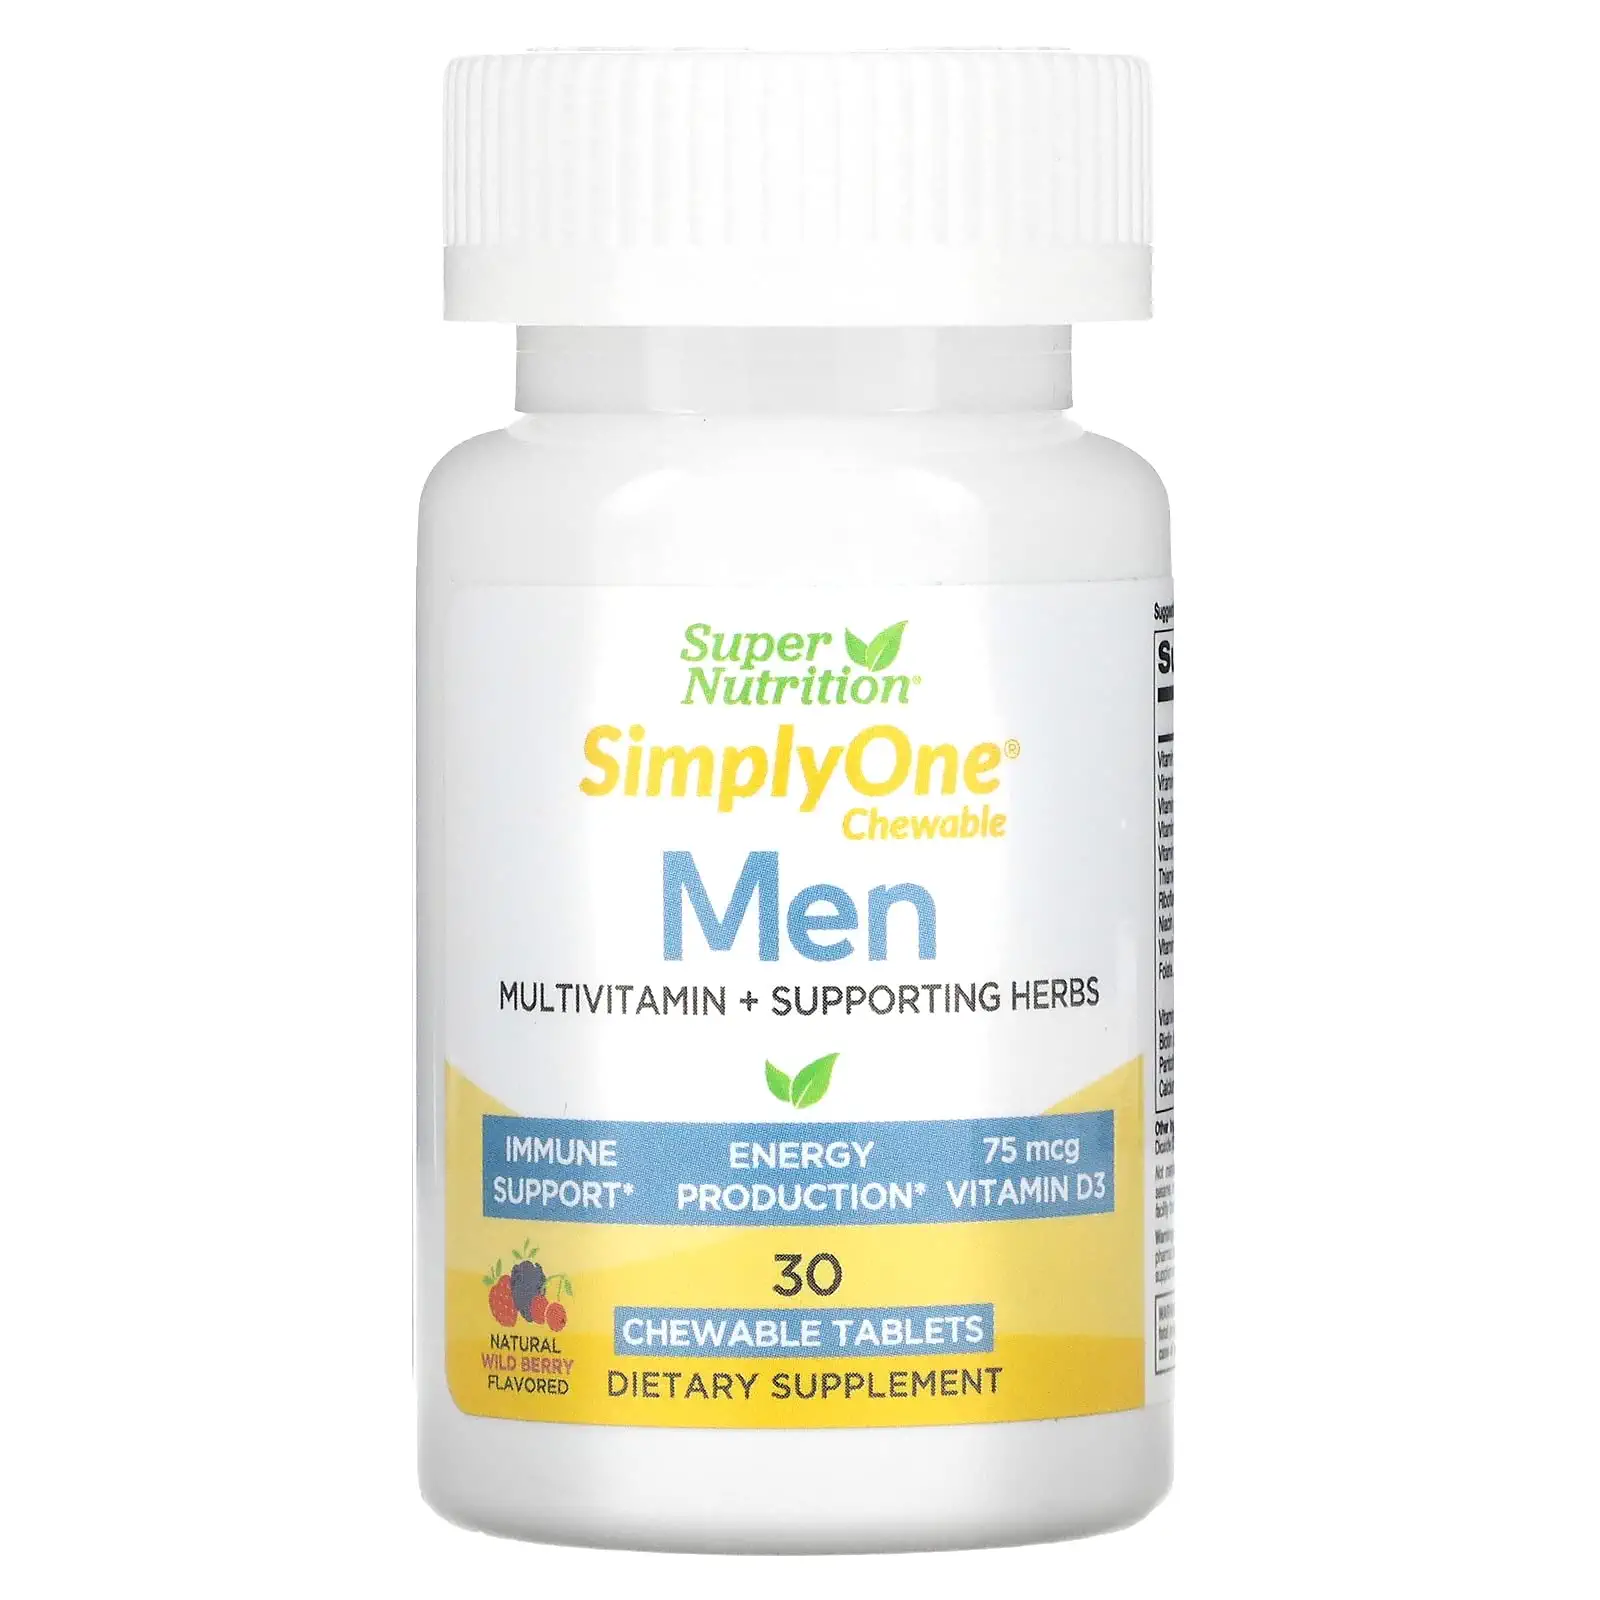 Super Nutrition SimplyOne Men’s Multivitamin + Supporting Herbs